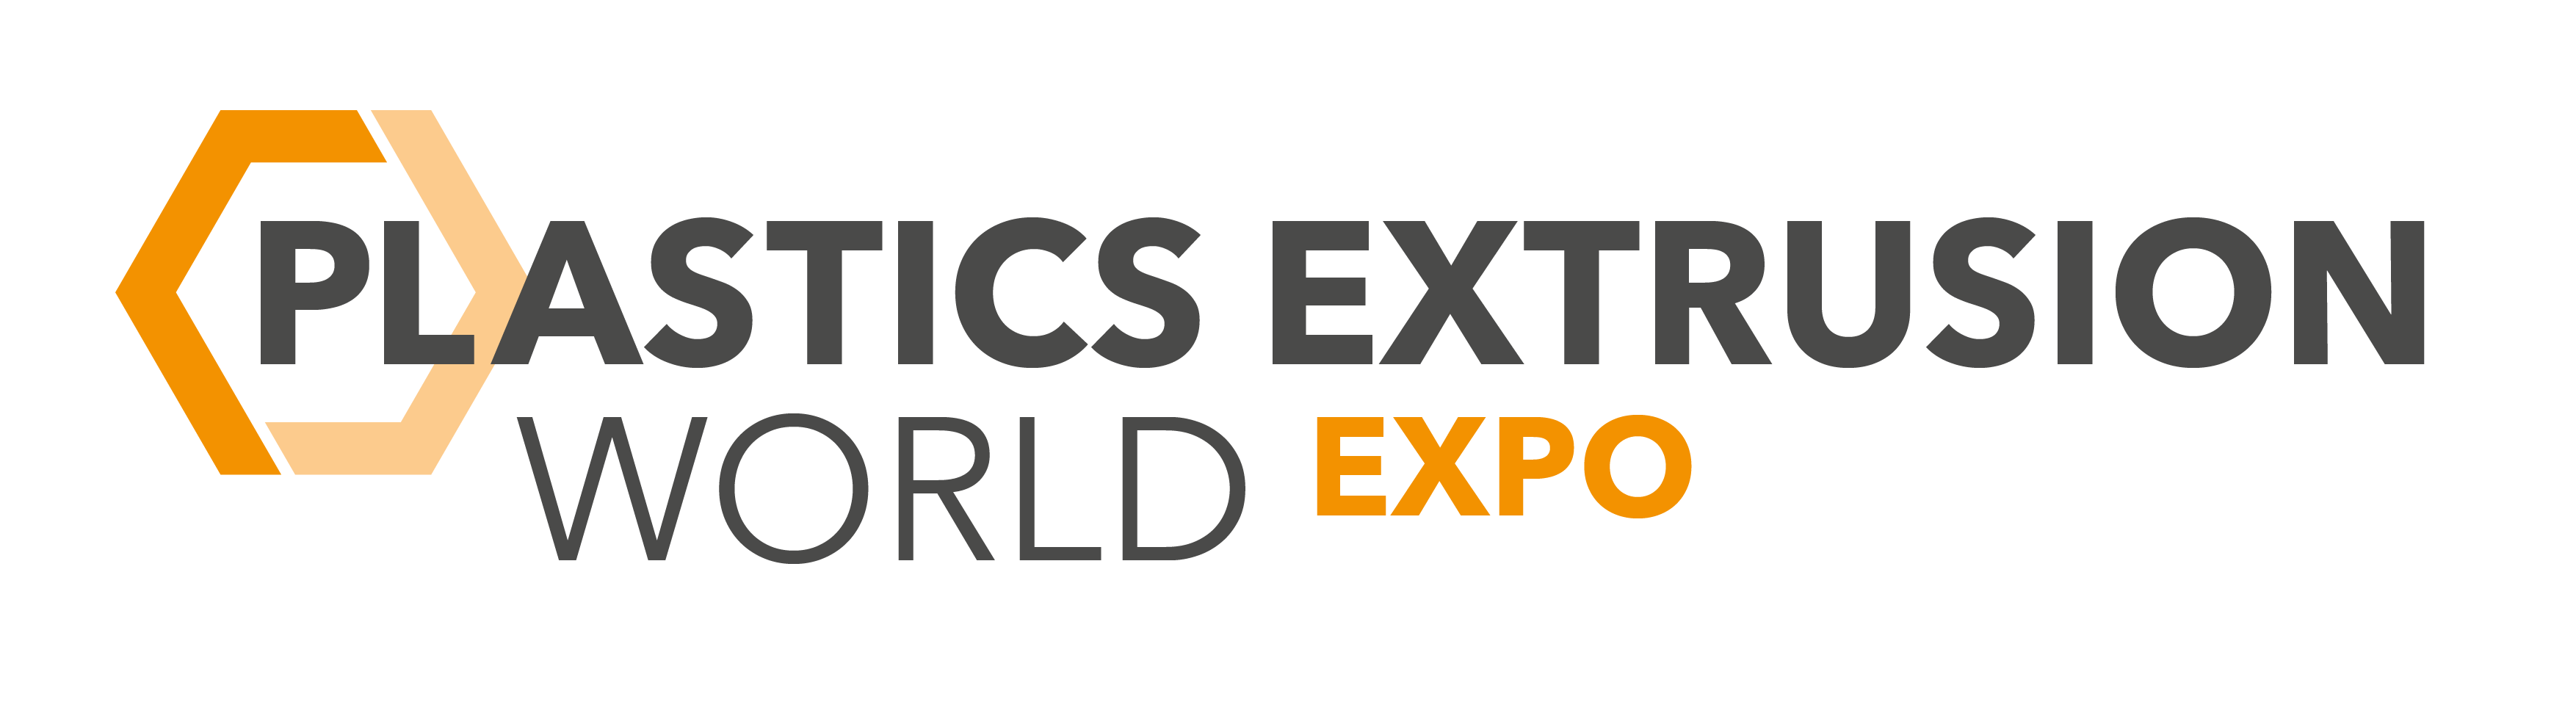 Plastics Extrusion World Expo logo